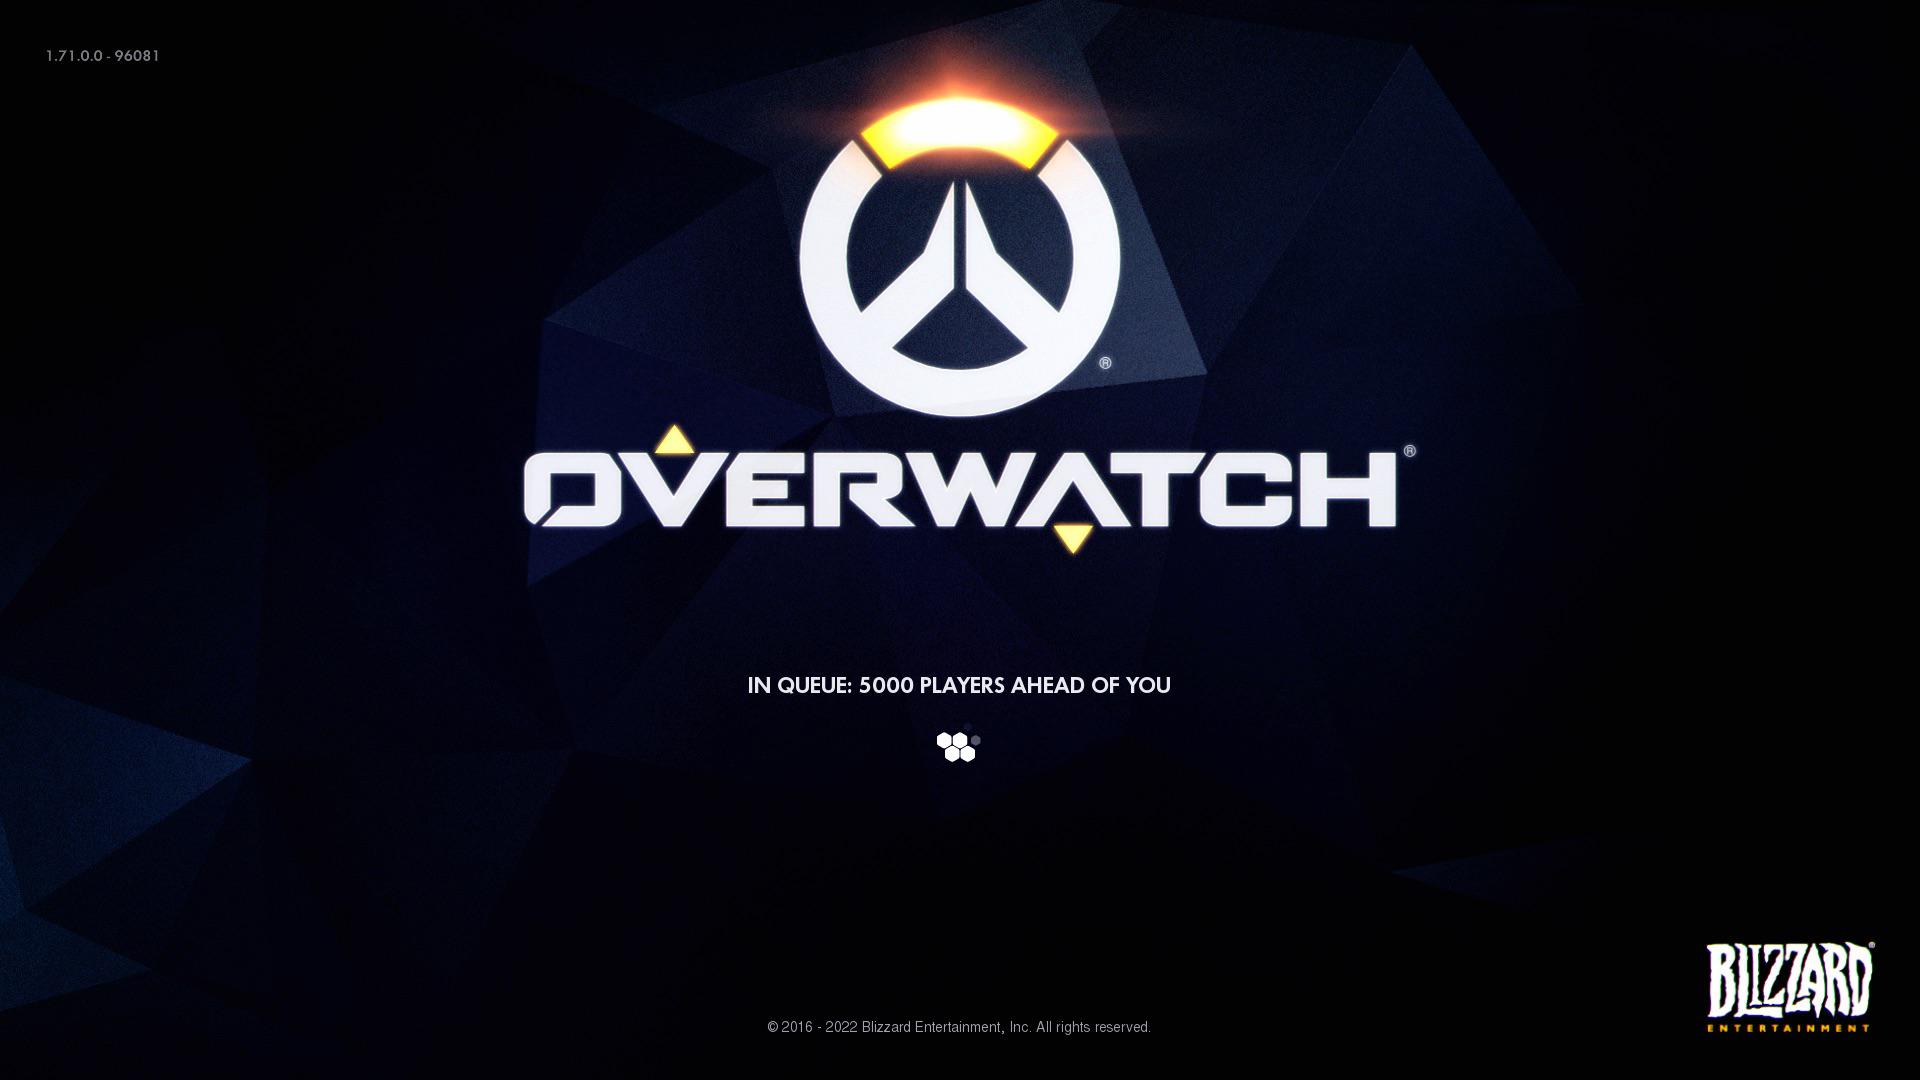 Overwatch 2 Queue Times Addressed by Blizzard - GameRevolution